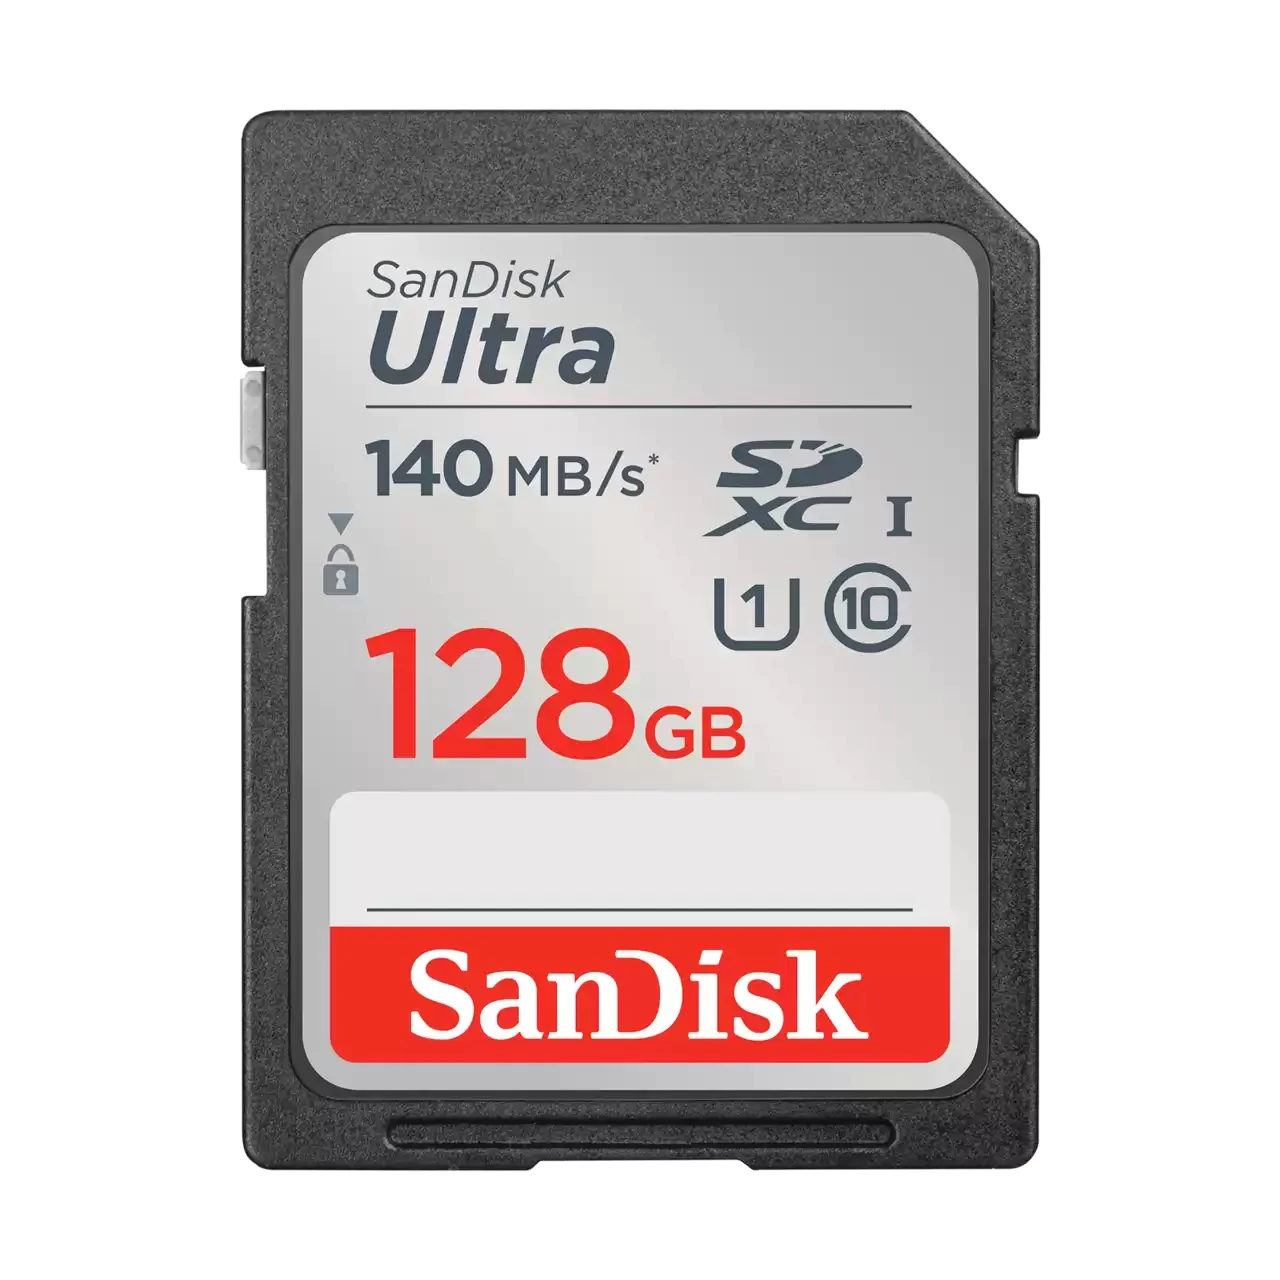 Sandisk 128Gb SDXC Ultra 140MB/s Memory Card Sandisk SD Card